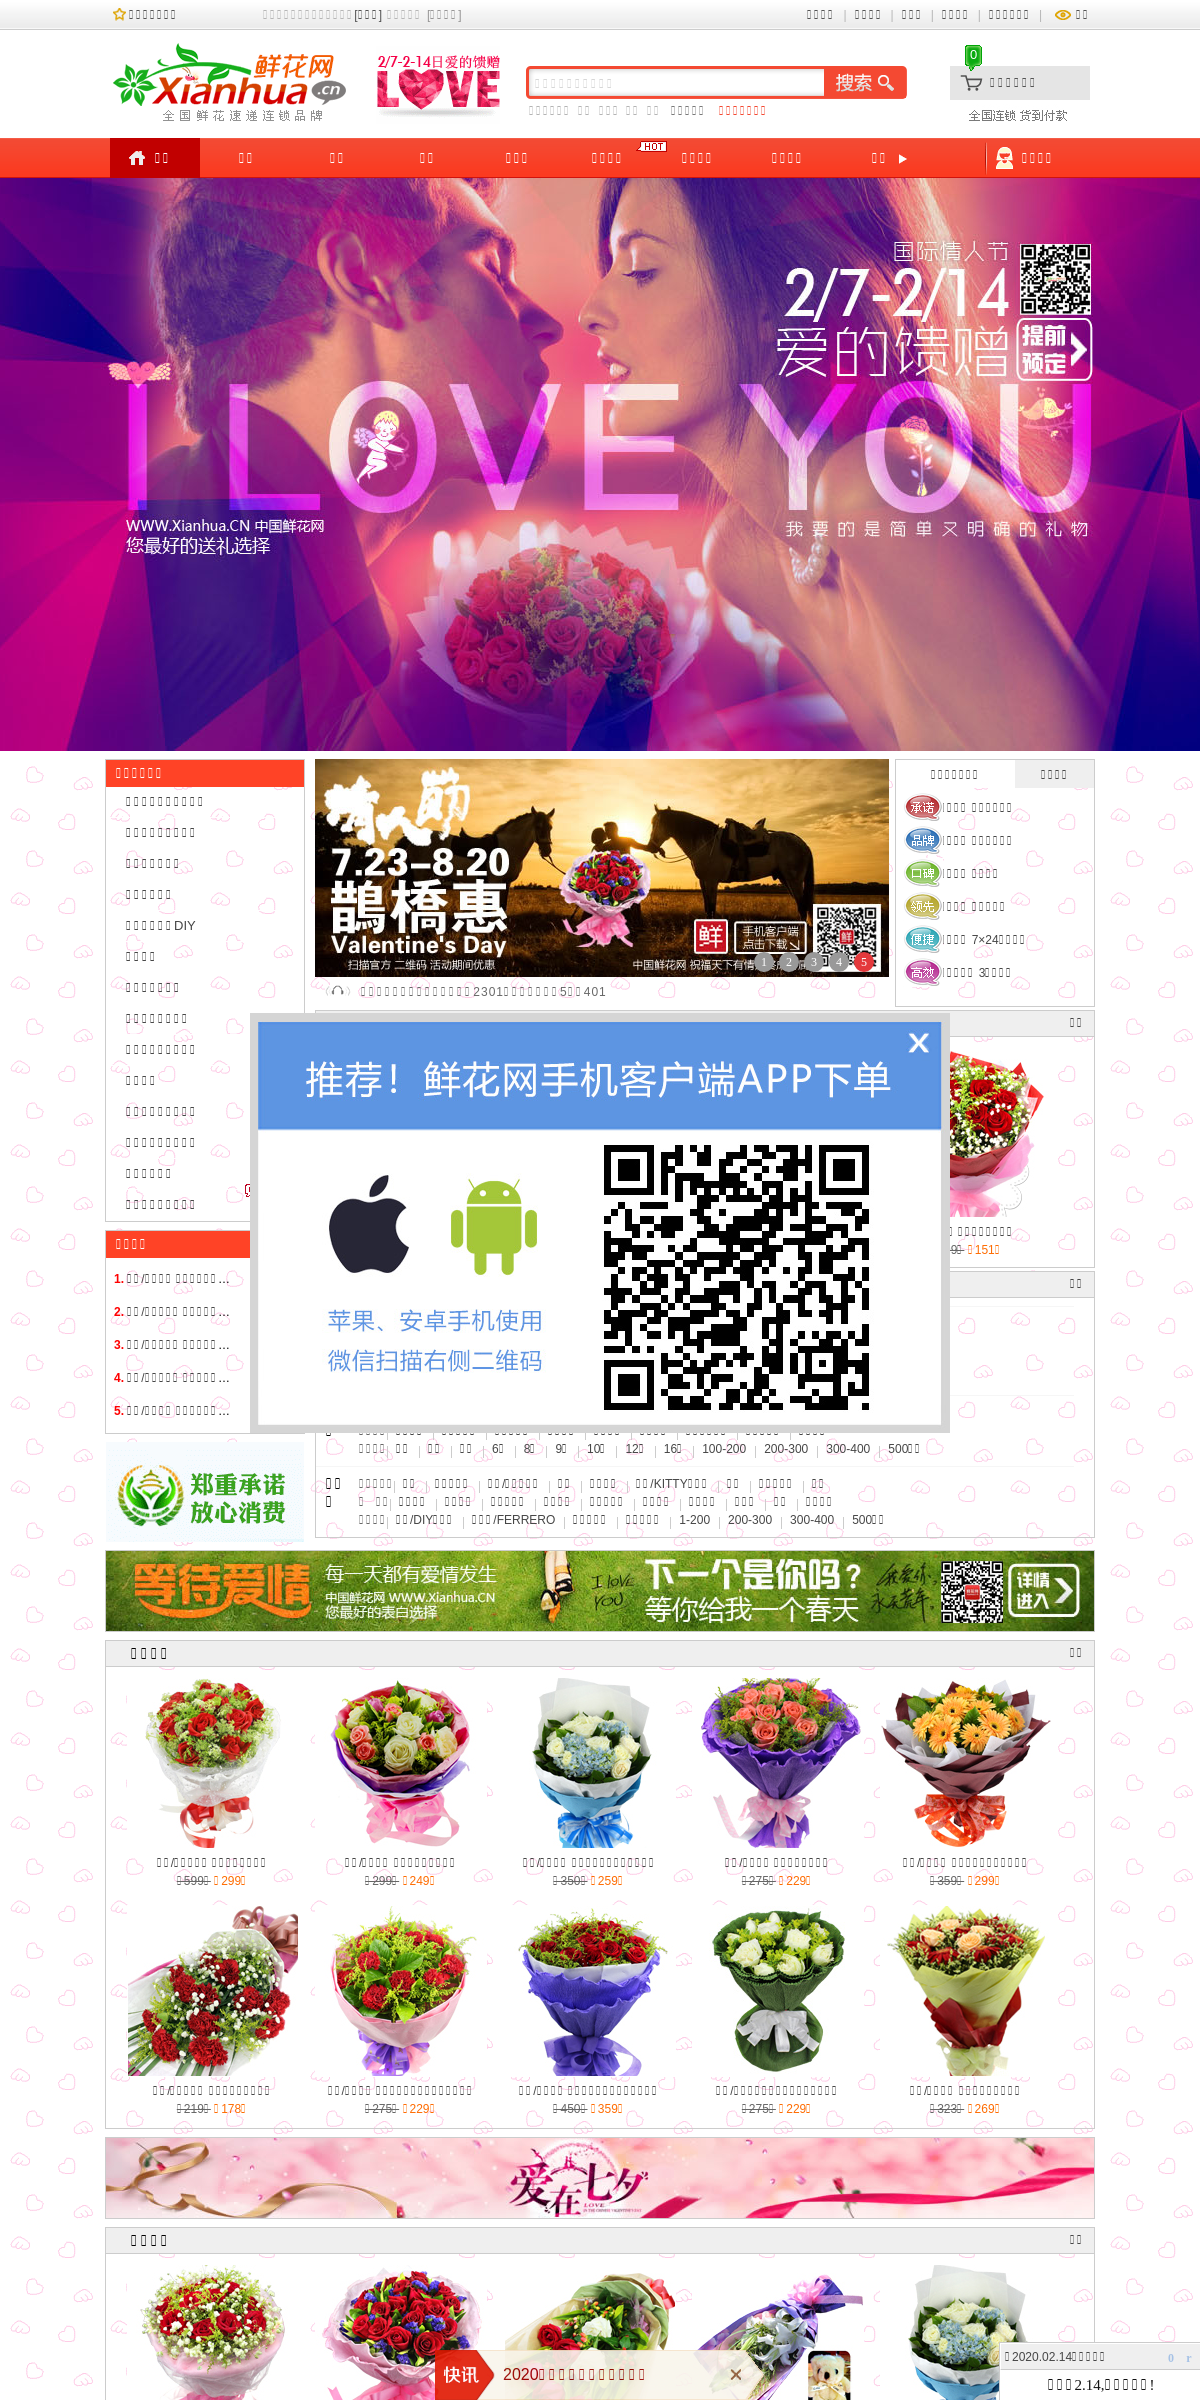 A complete backup of xianhua.com.cn